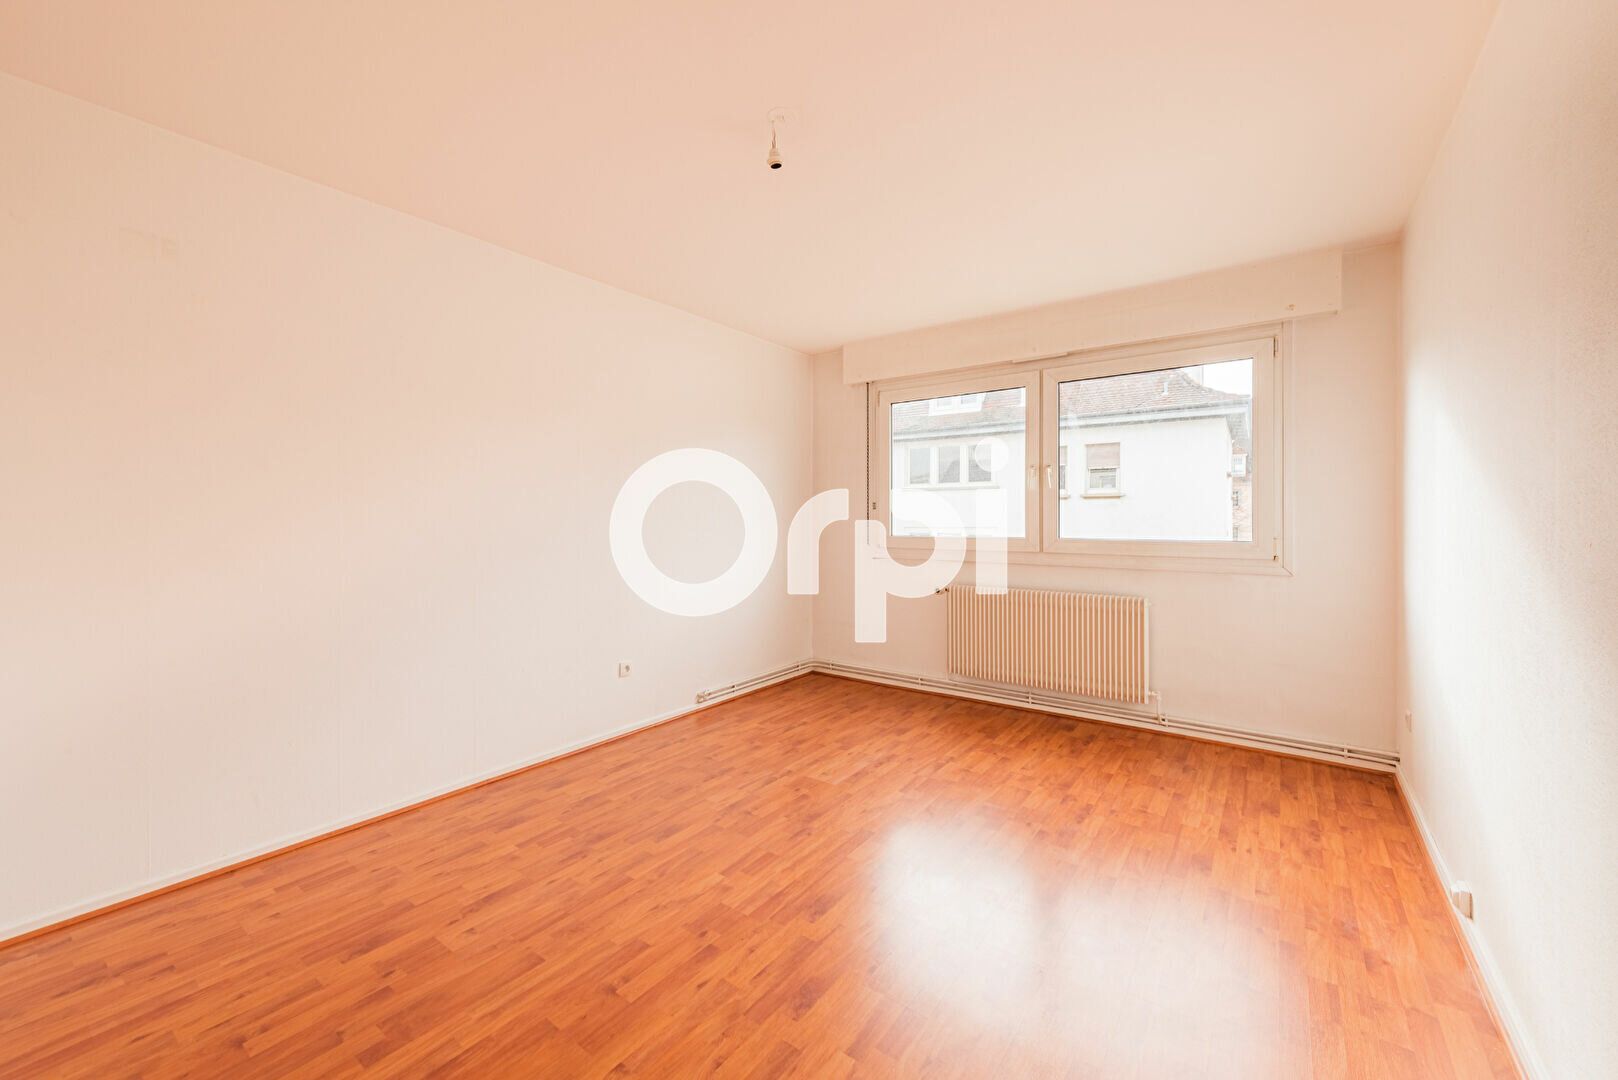 Appartement à vendre 5 128.91m2 à Strasbourg vignette-6